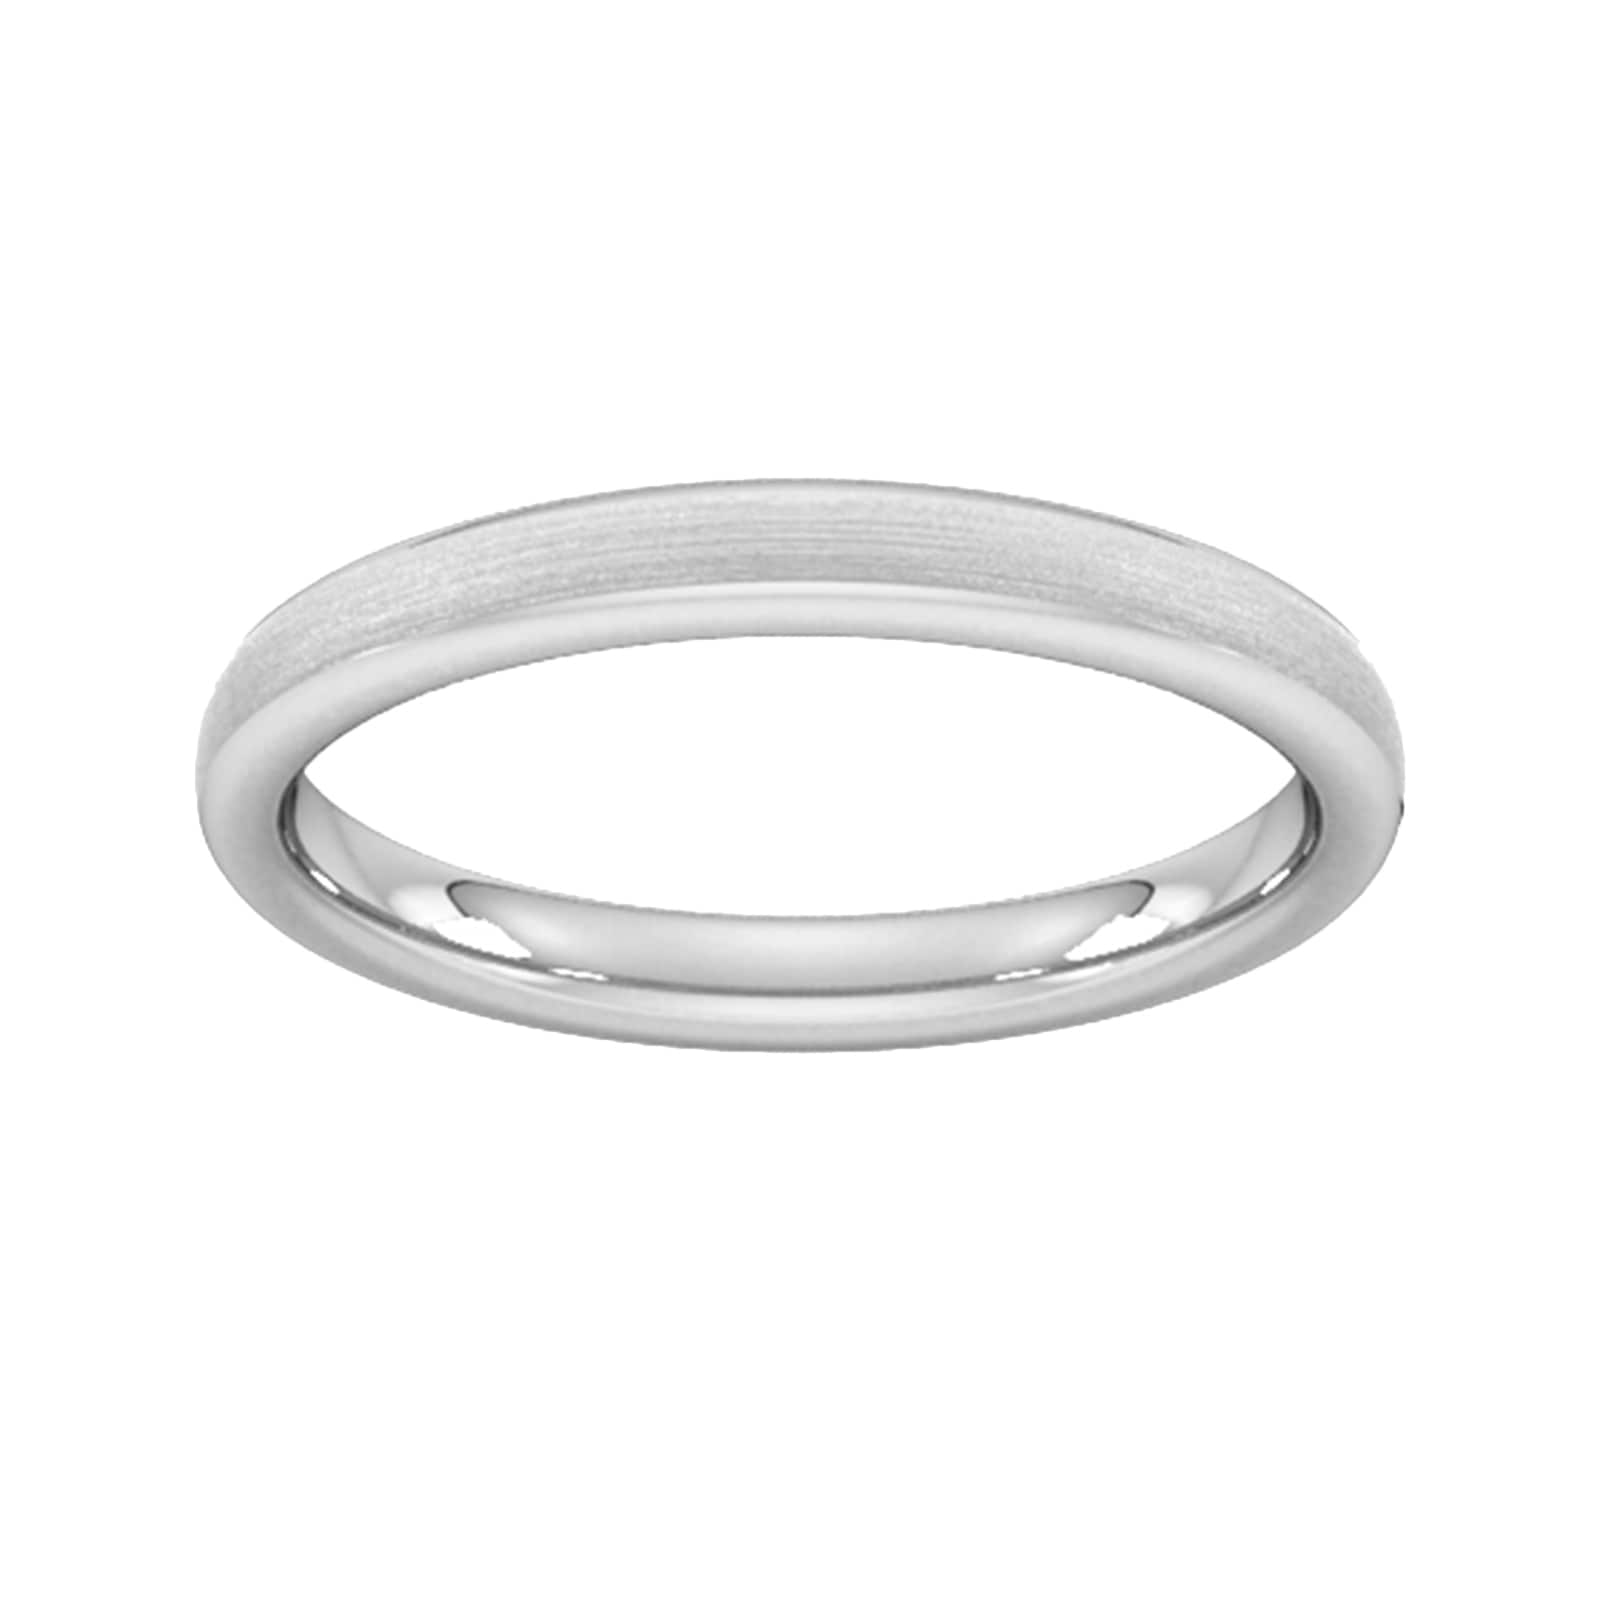 2.5mm Slight Court Standard Matt Finished Wedding Ring In 18 Carat White Gold - Ring Size M